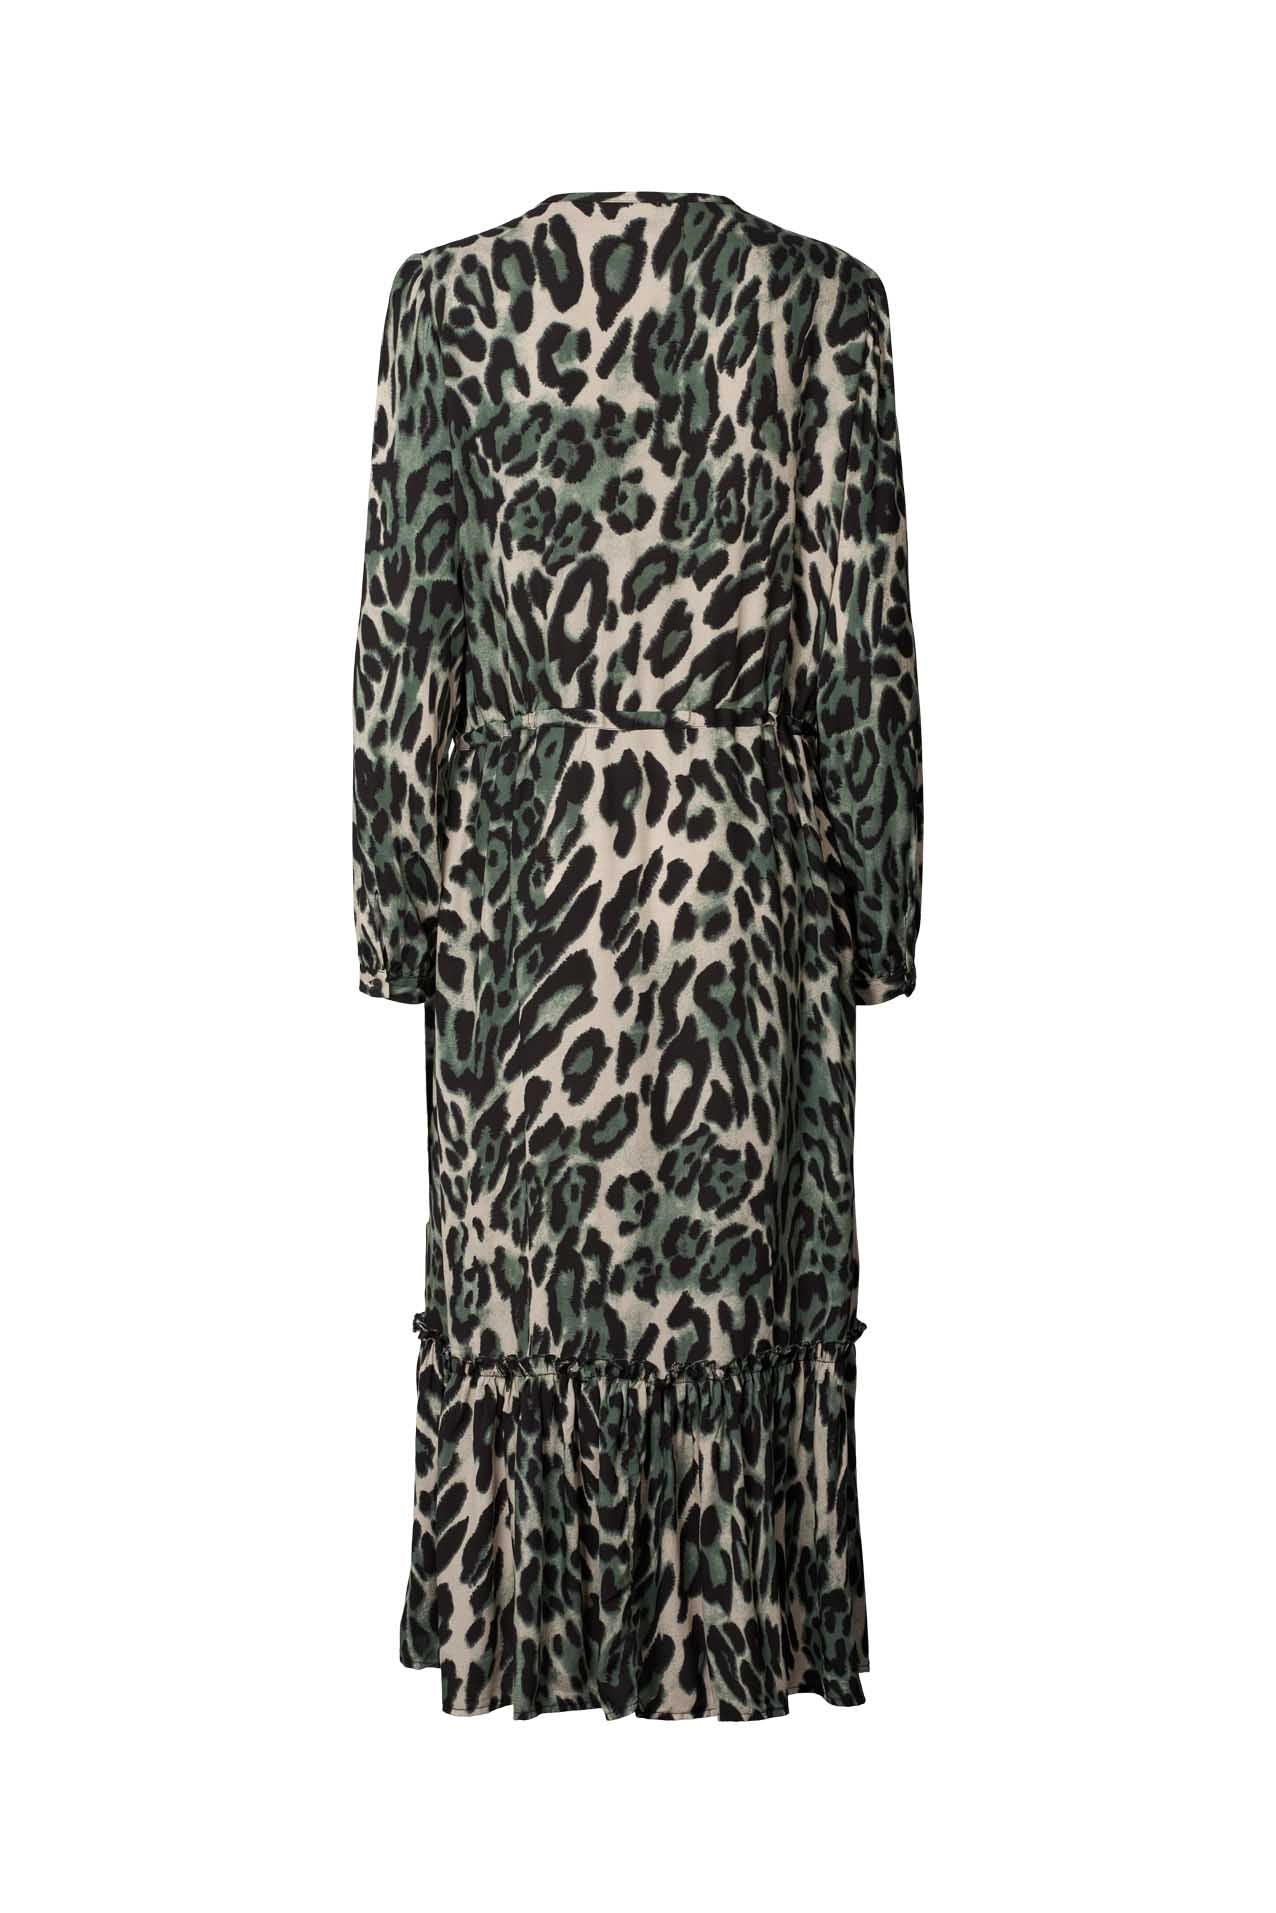 Lollys Laundry Anastacia Dress - Leopard